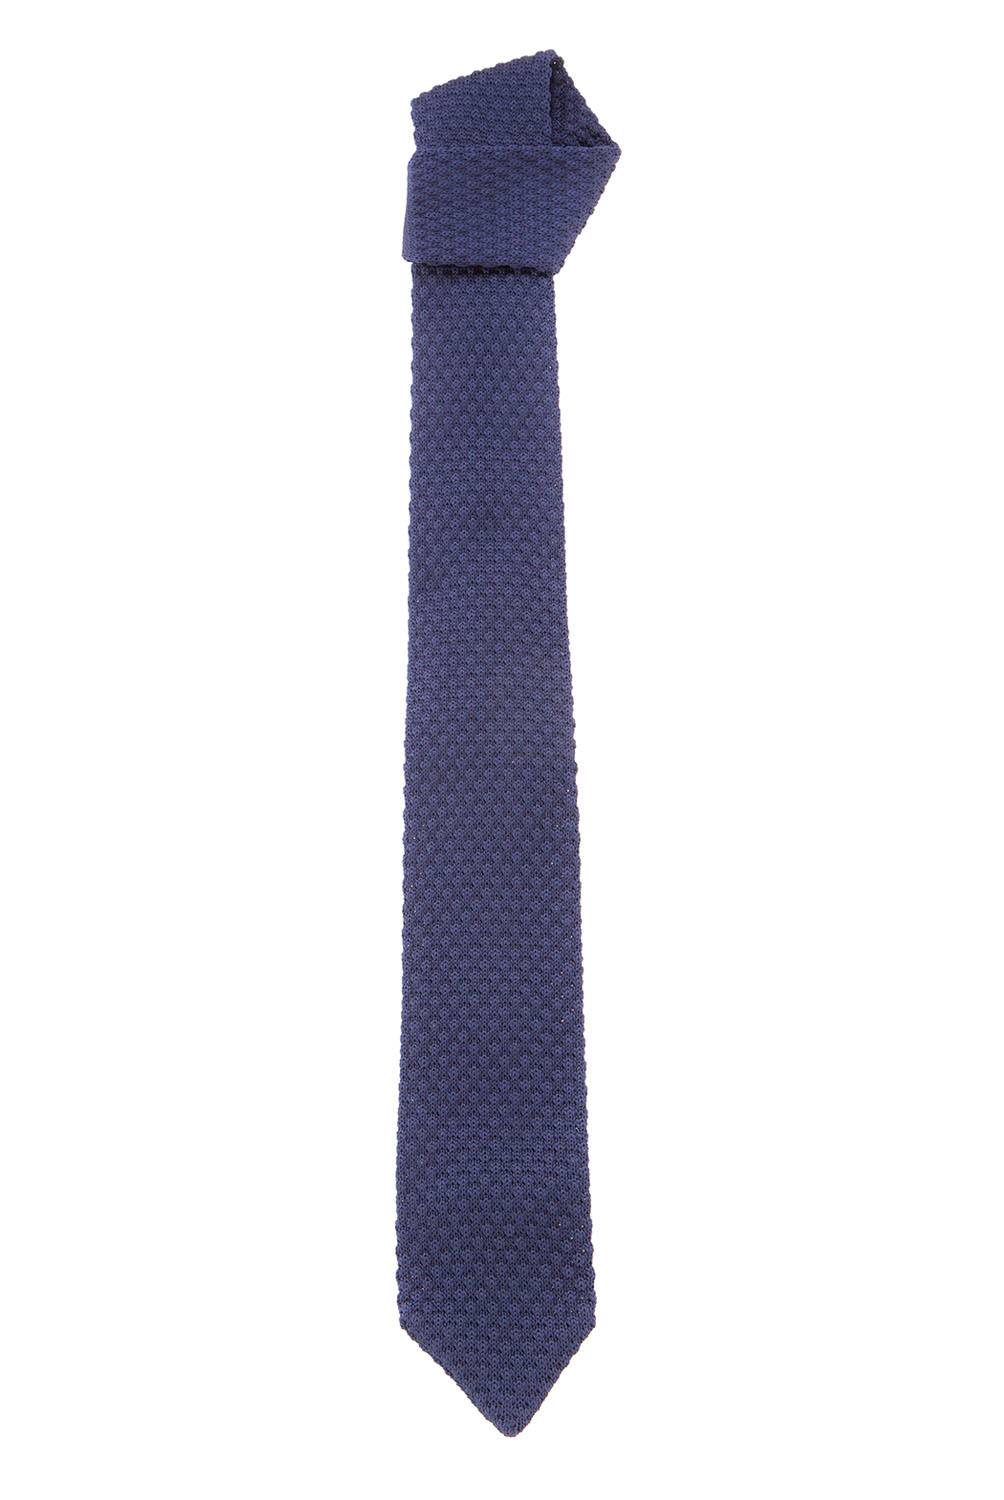 Christian Lacroix - Corbata Tejida Texturado 7 cm, Clásica